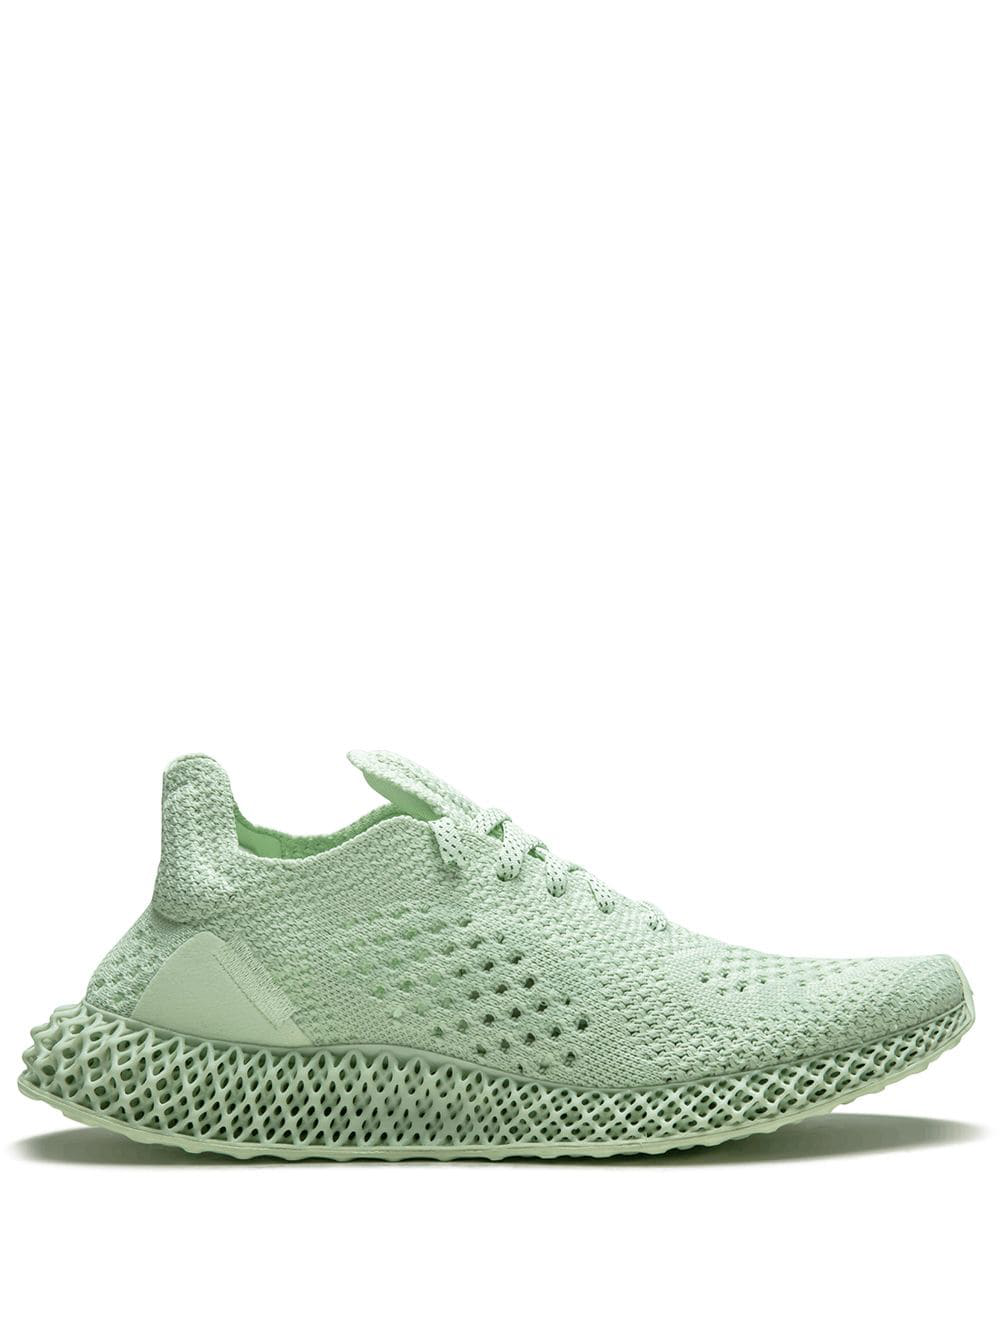 Adidas Originals Adidas Arsham Future Runner 4d Sneakers - Green | ModeSens